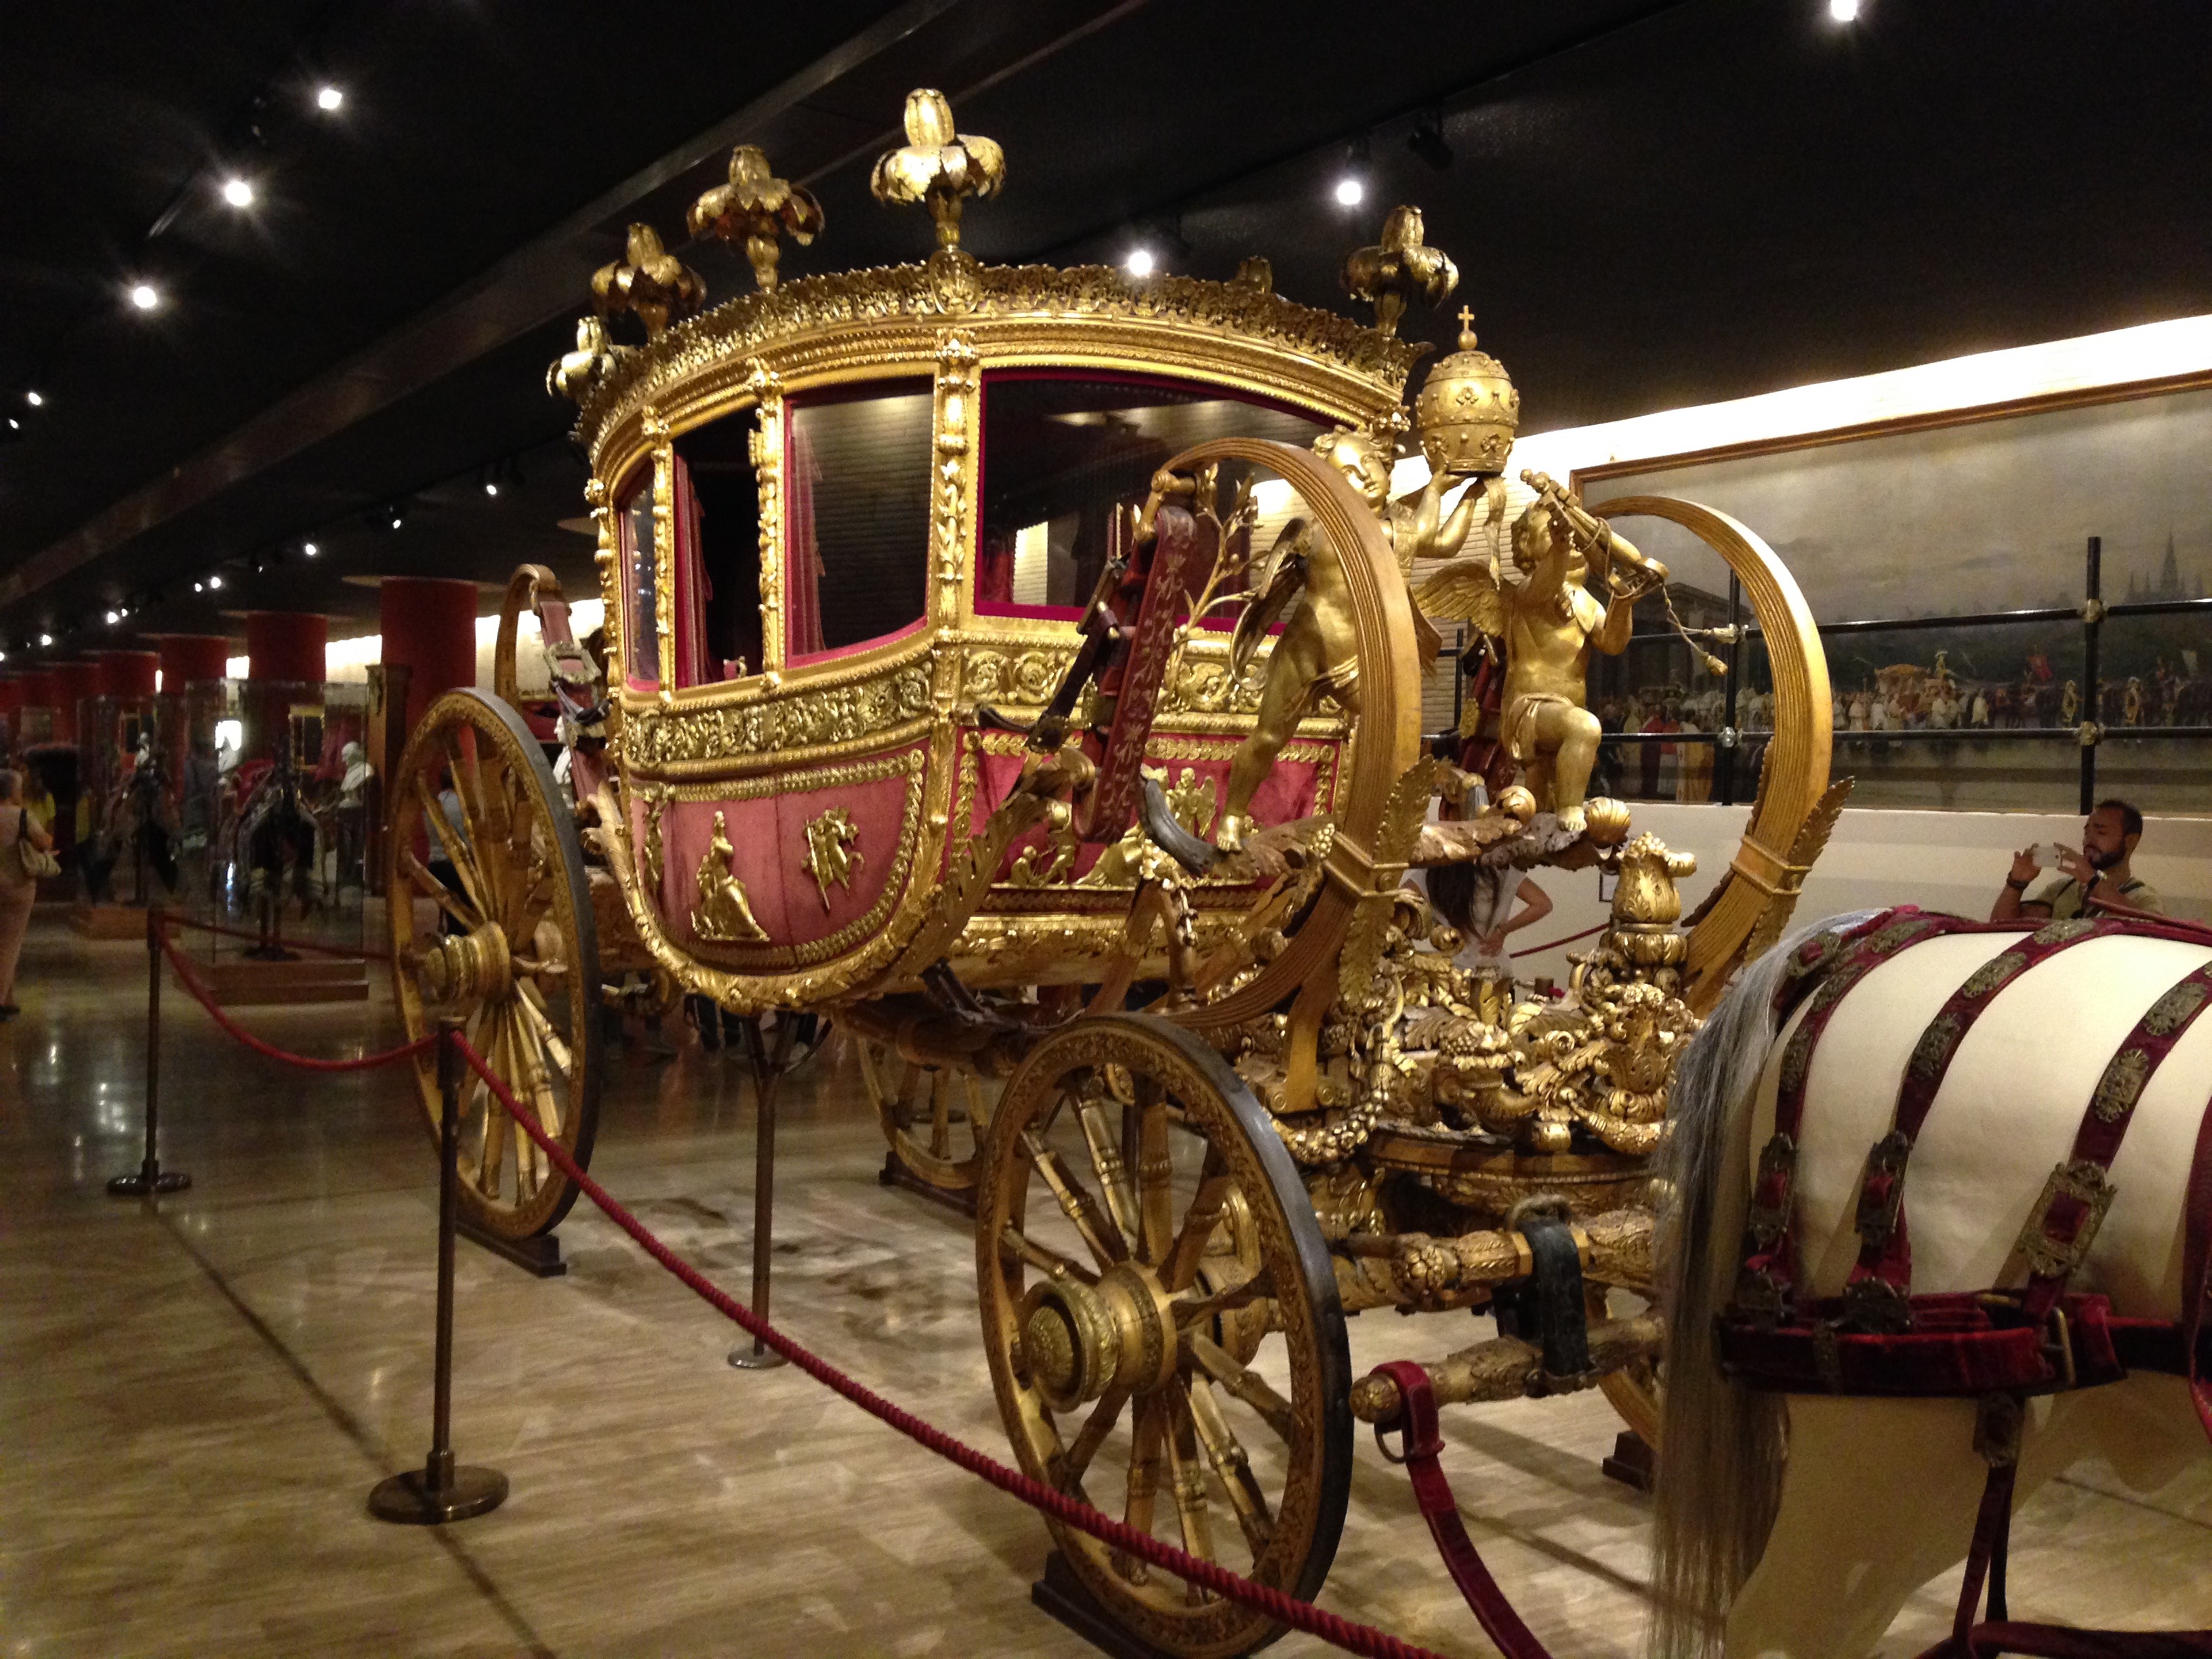 A Vatican Carriage